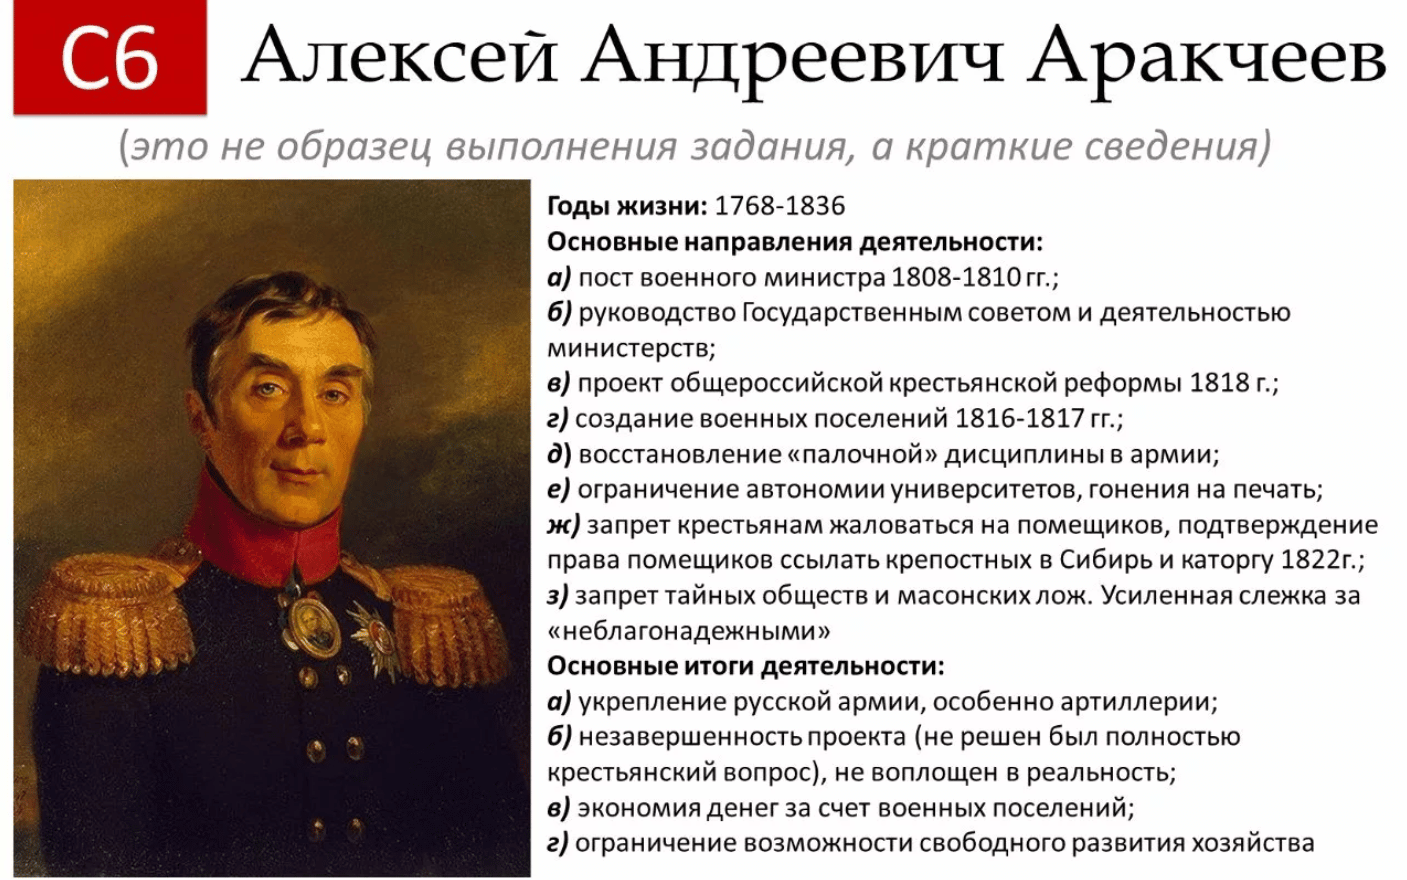 Алексей Андреевич Аракчеев